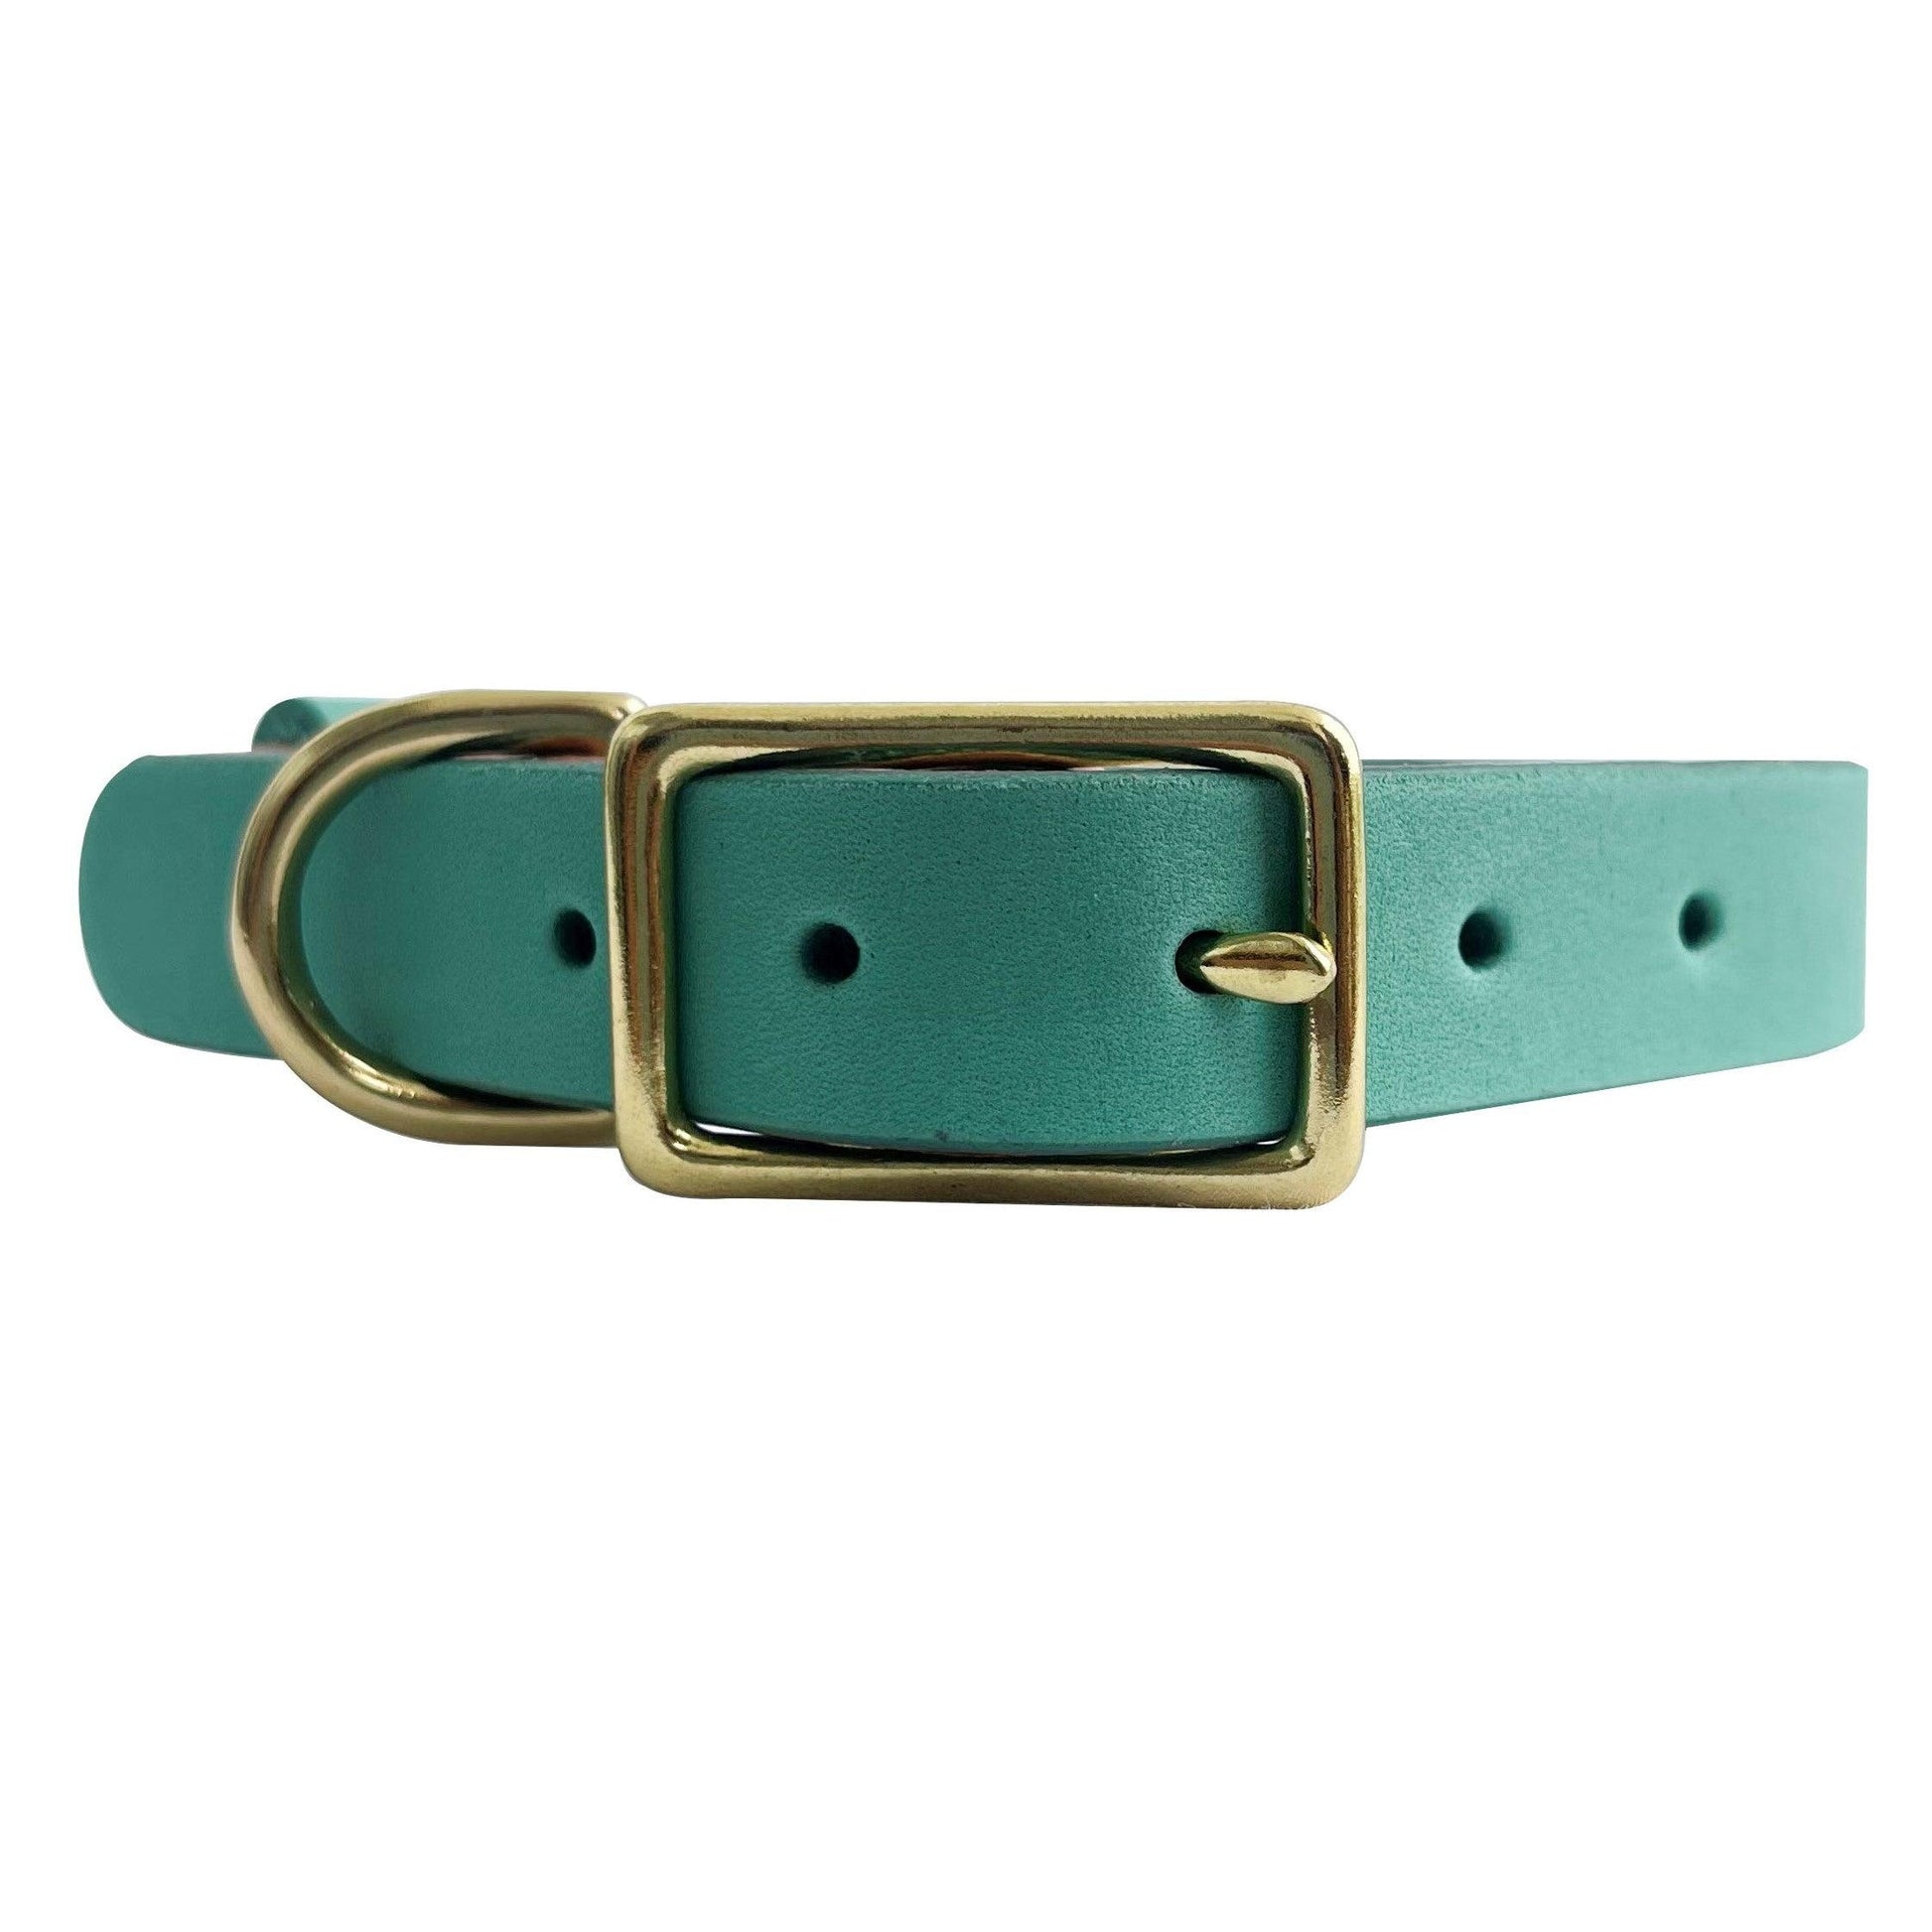 Pandora Dog Collar in Sea Green